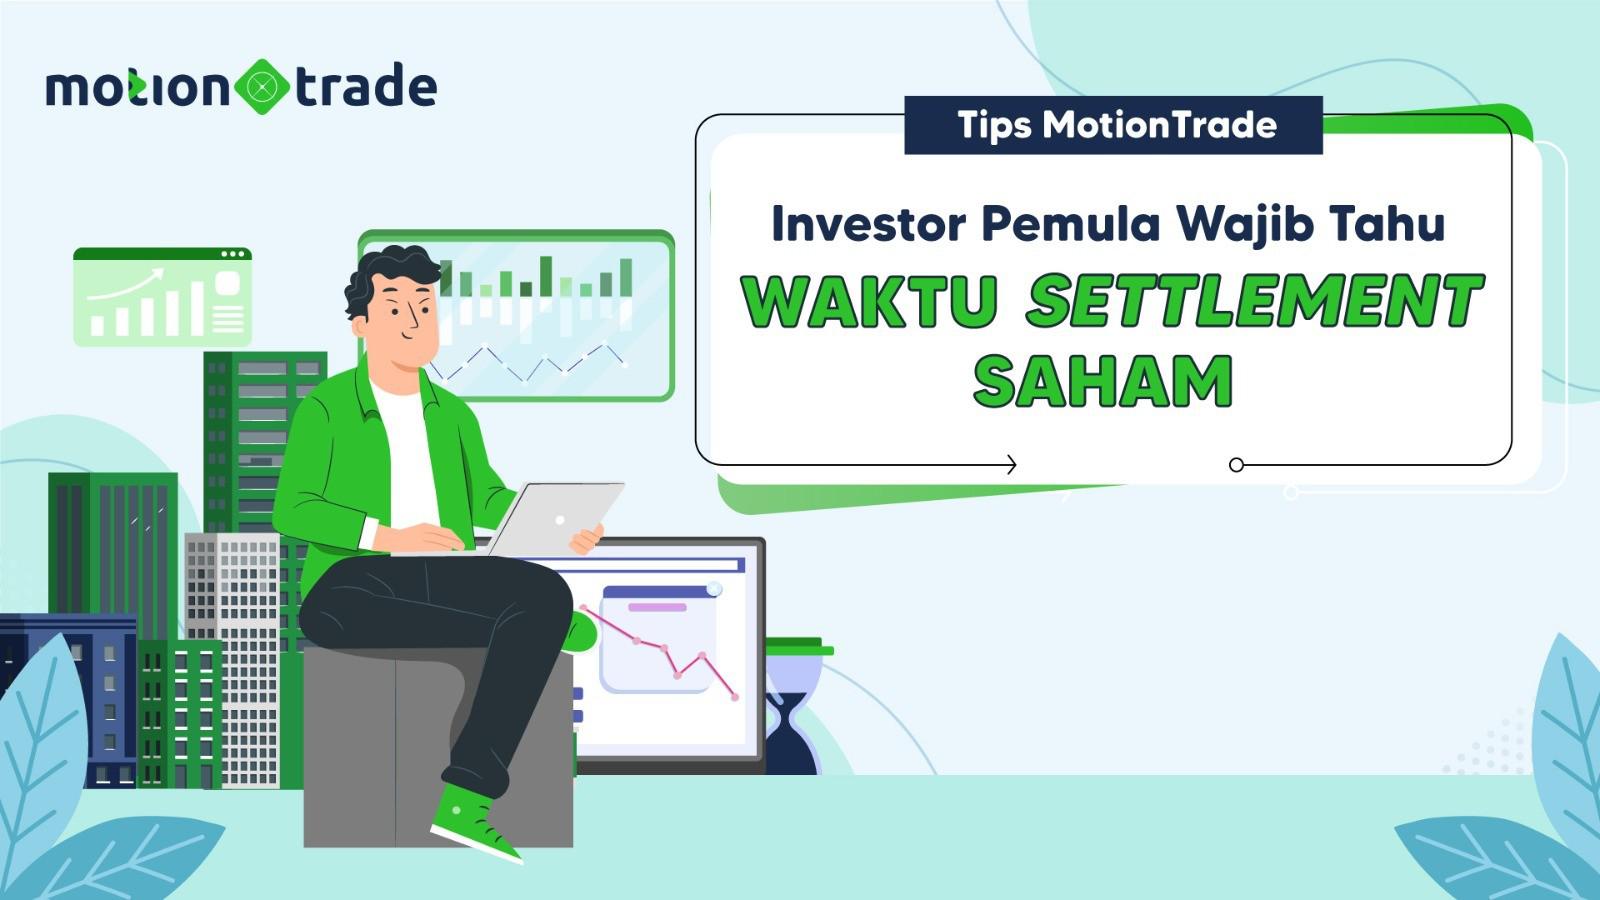 Tips MotionTrade: Investor Pemula Wajib Tahu Waktu Settlement Saham